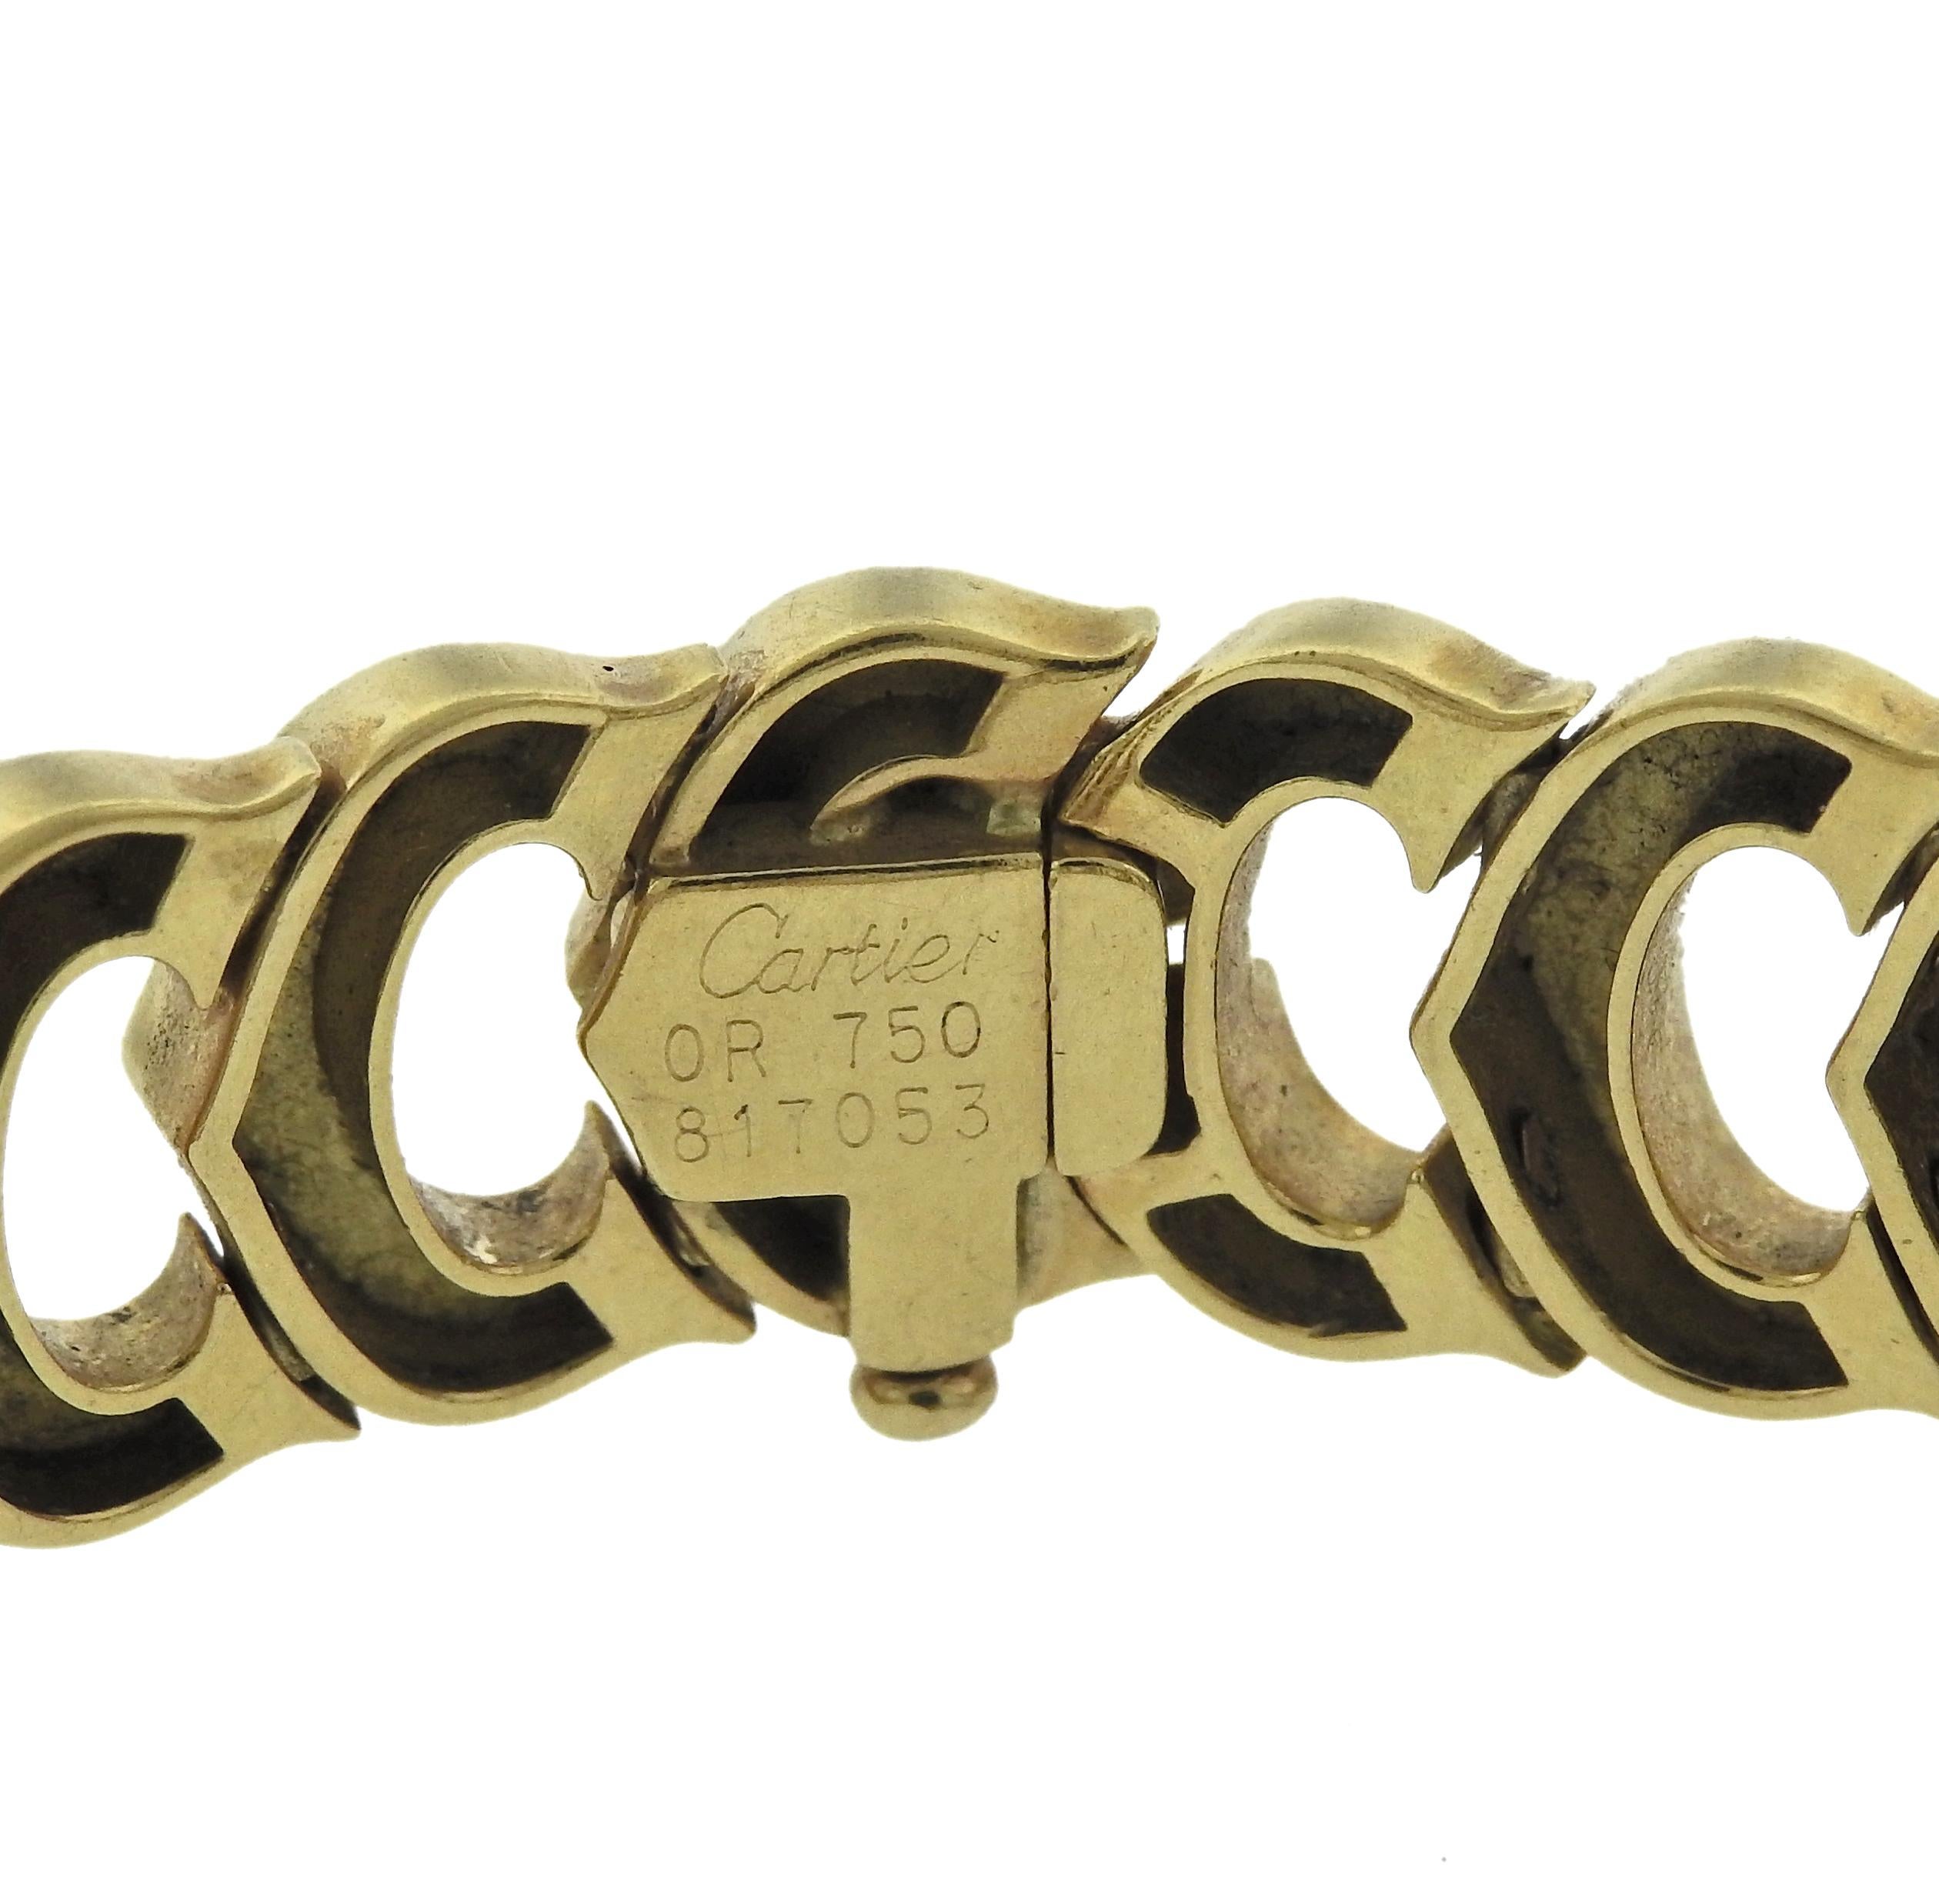 18k yellow gold C de Cartier bracelet. Bracelet is 7